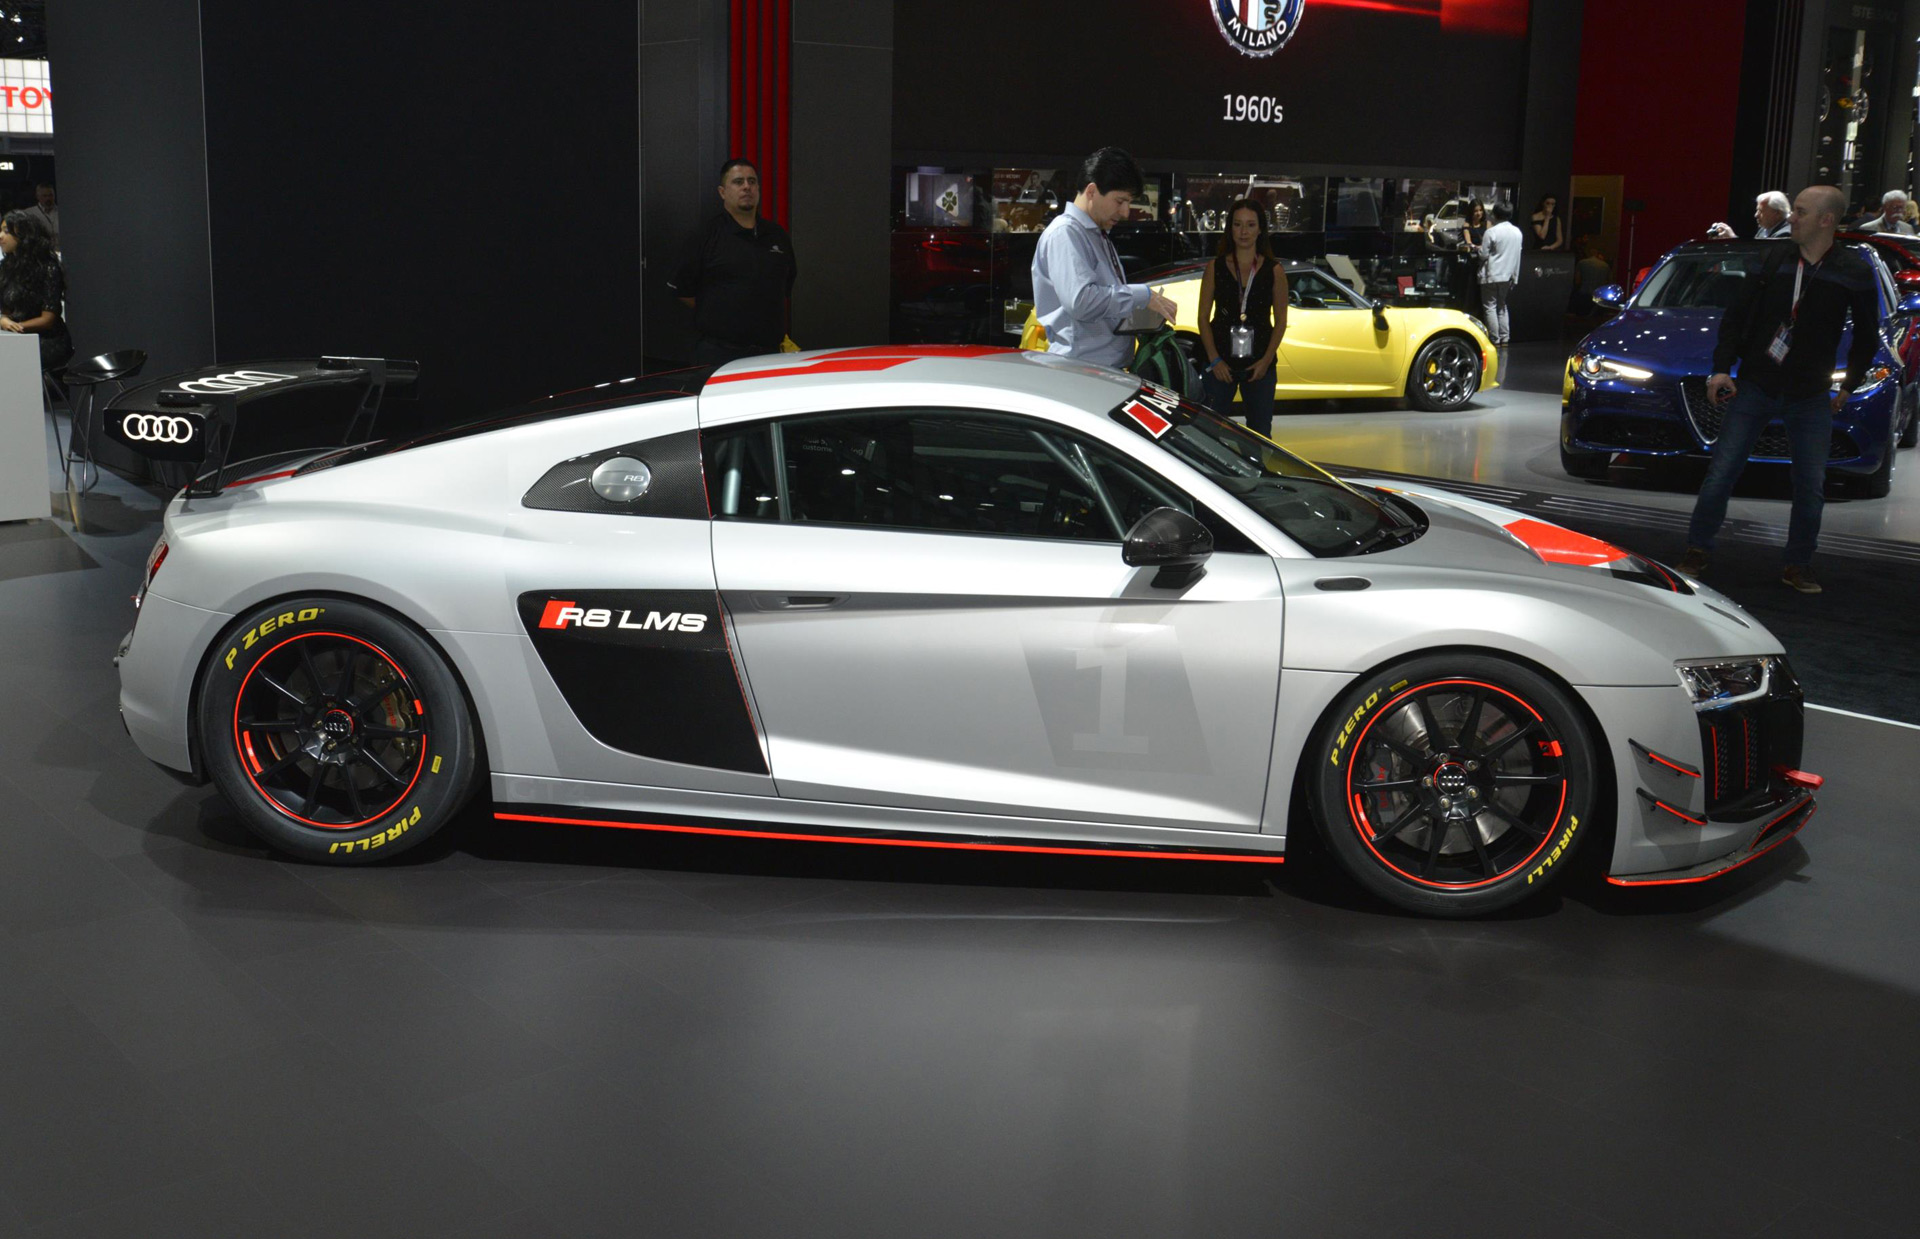 Audi adds a second R8 race car, the R8 LMS GT4